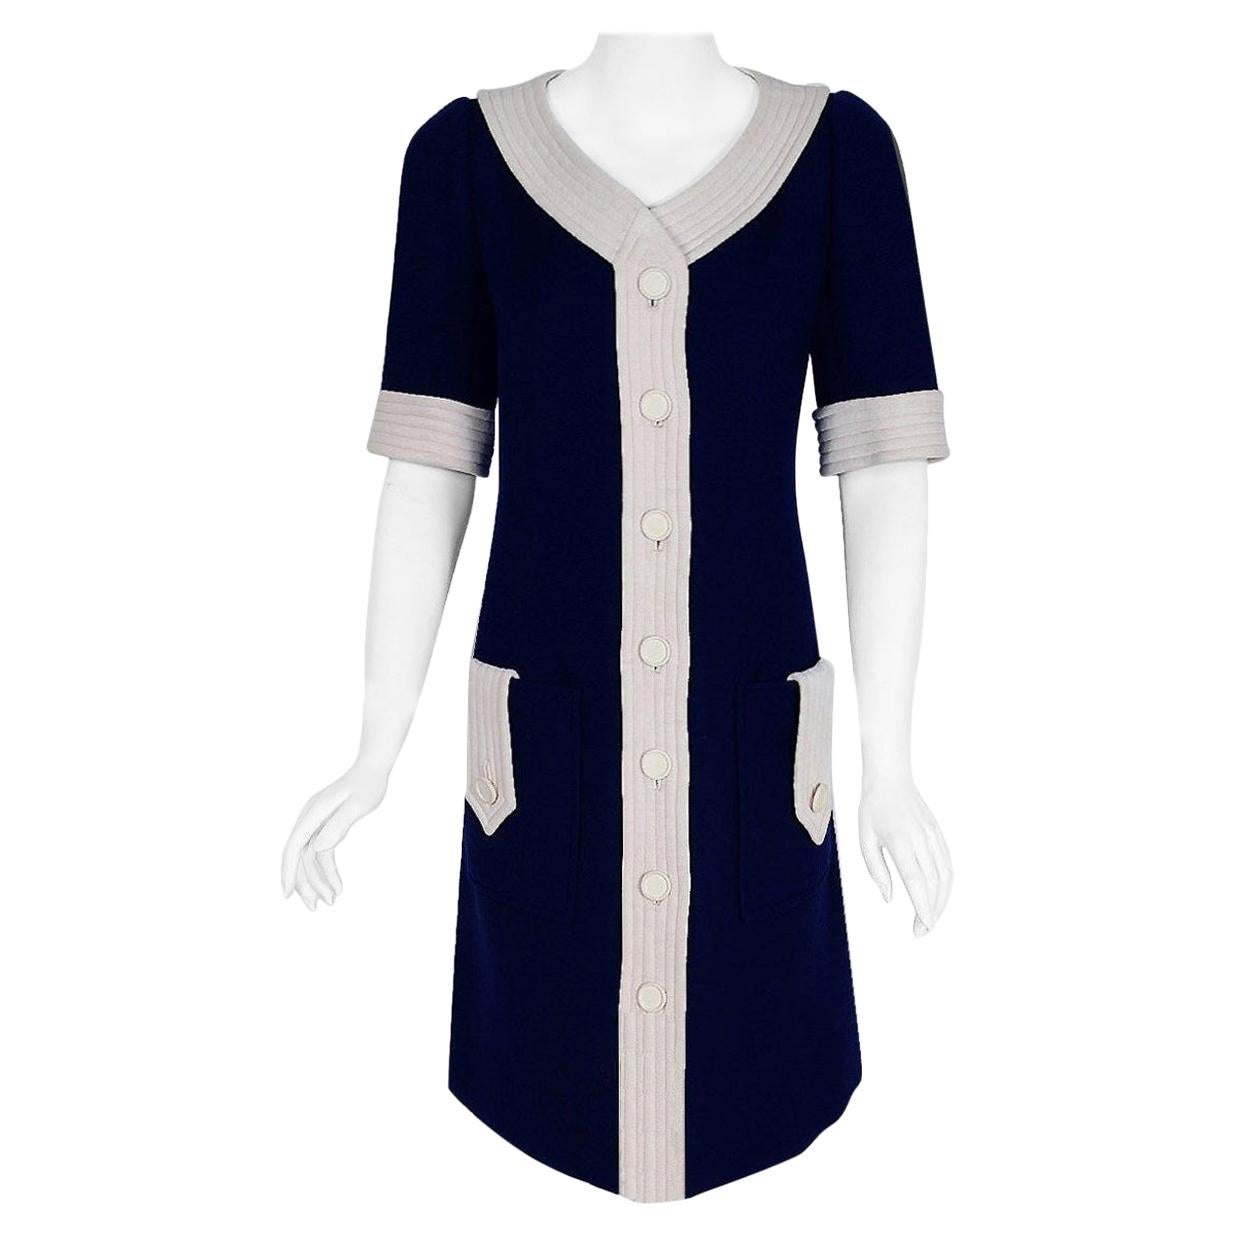 Vintage 1967 Courreges Couture Navy & White Wool Block Color Mod Space-Age Dress